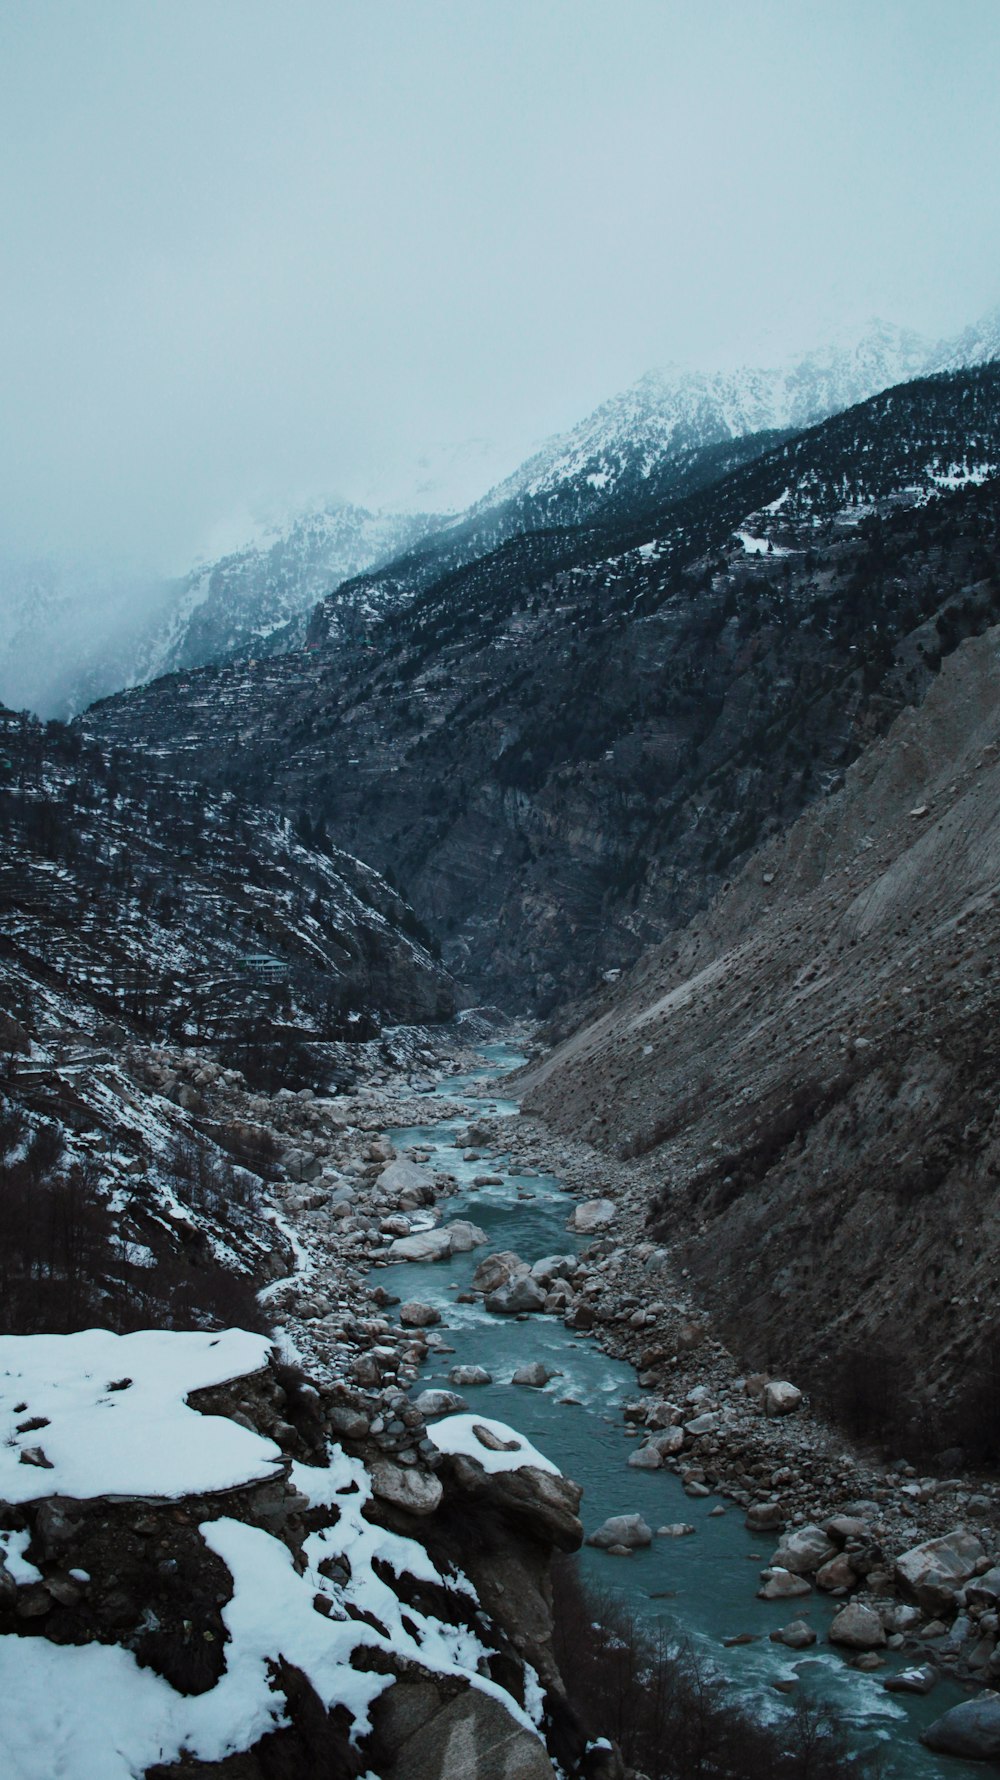 río que fluye entre montañas